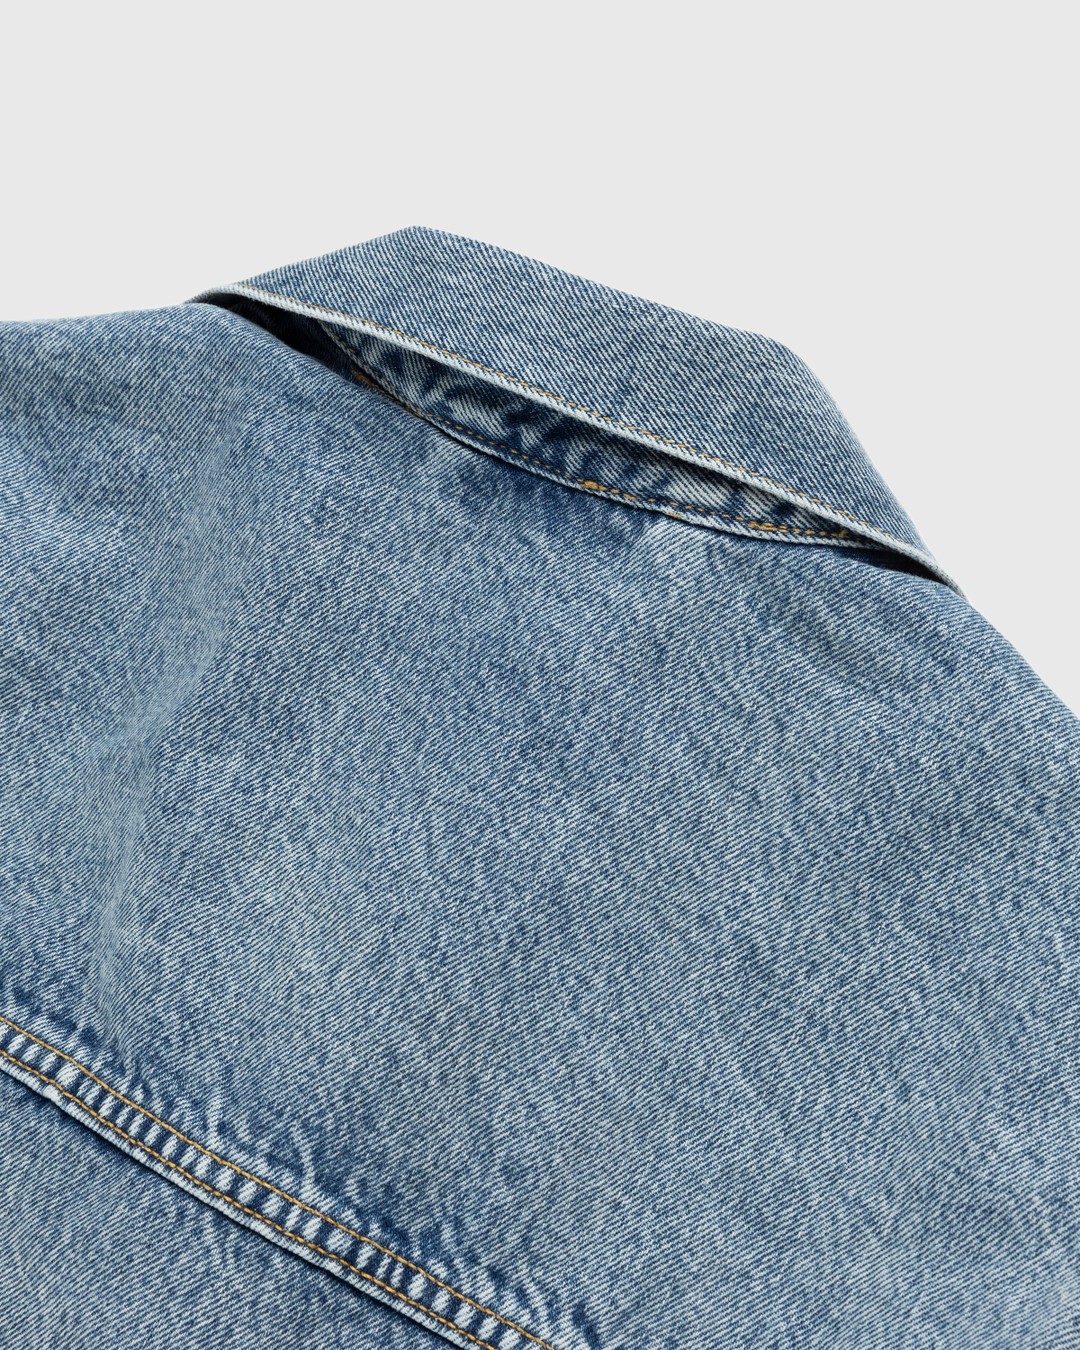 Levi's x AMBUSH – Trucker Jacket Mid Indigo - Outerwear - Blue - Image 7